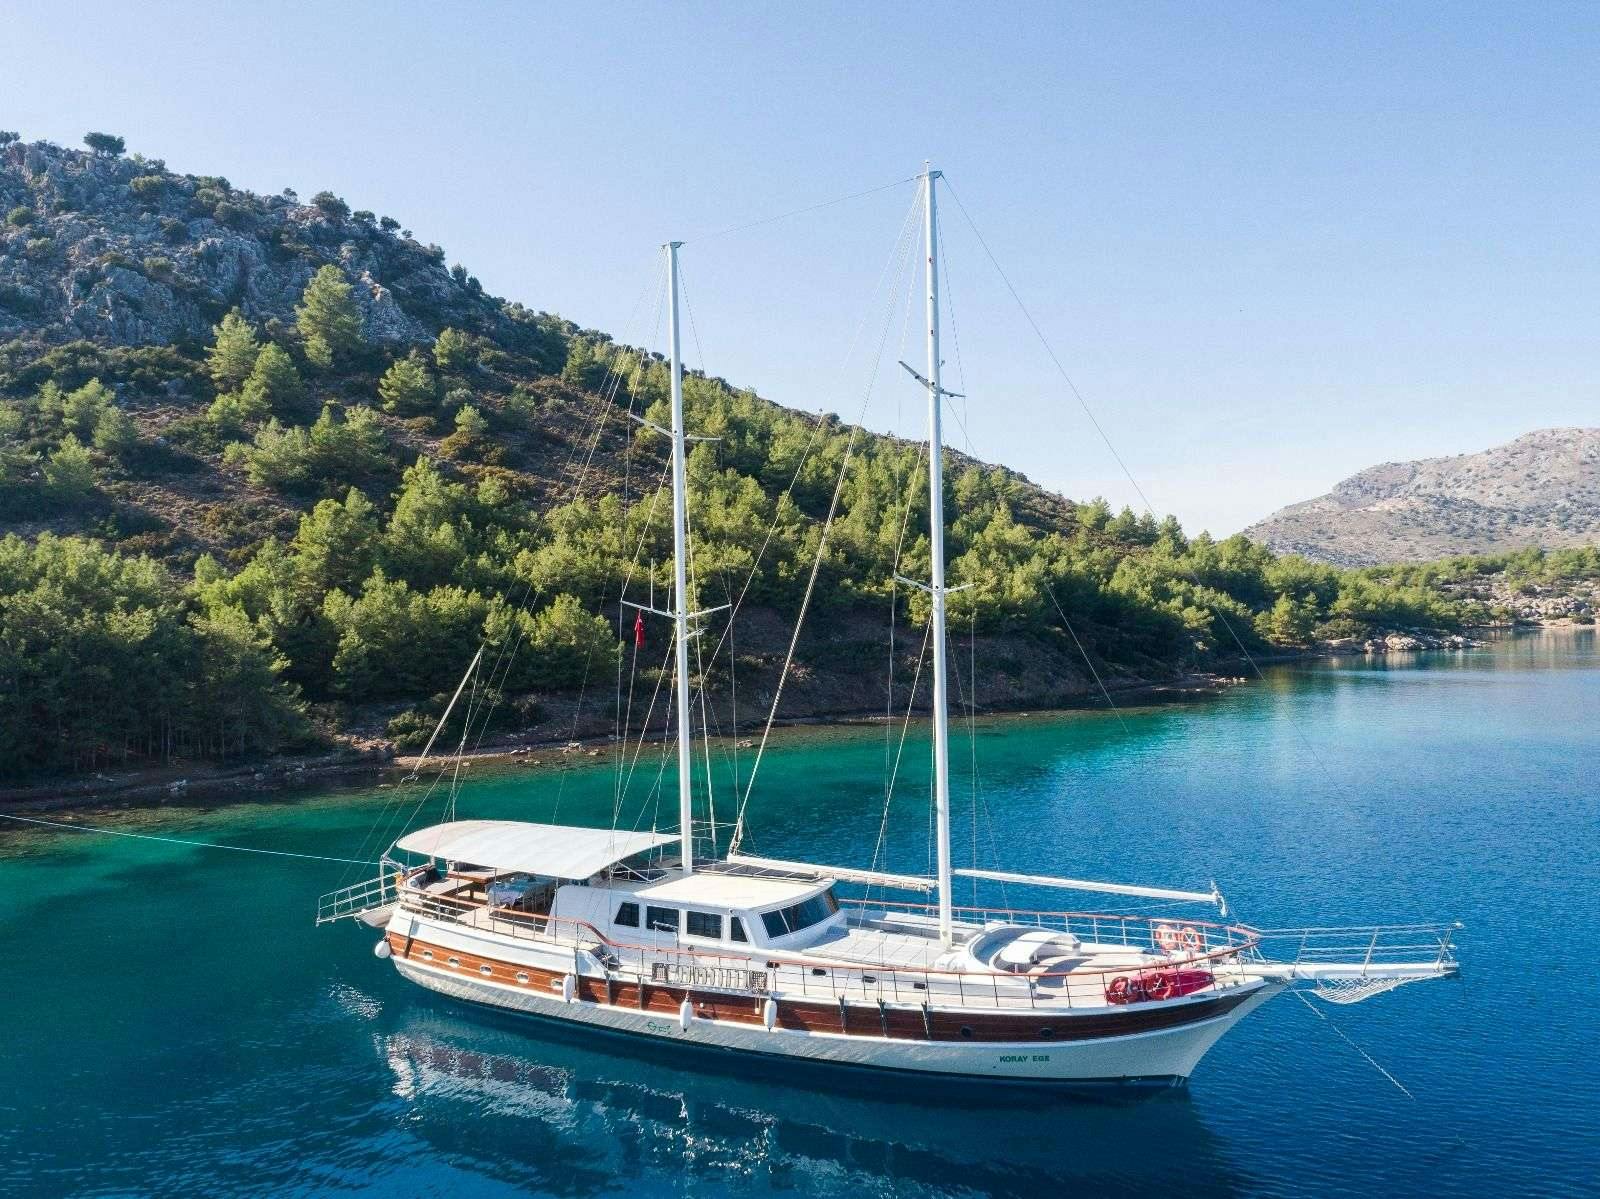 koray ege - Yacht Charter Vancouver Island & Boat hire in Greece & Turkey 1